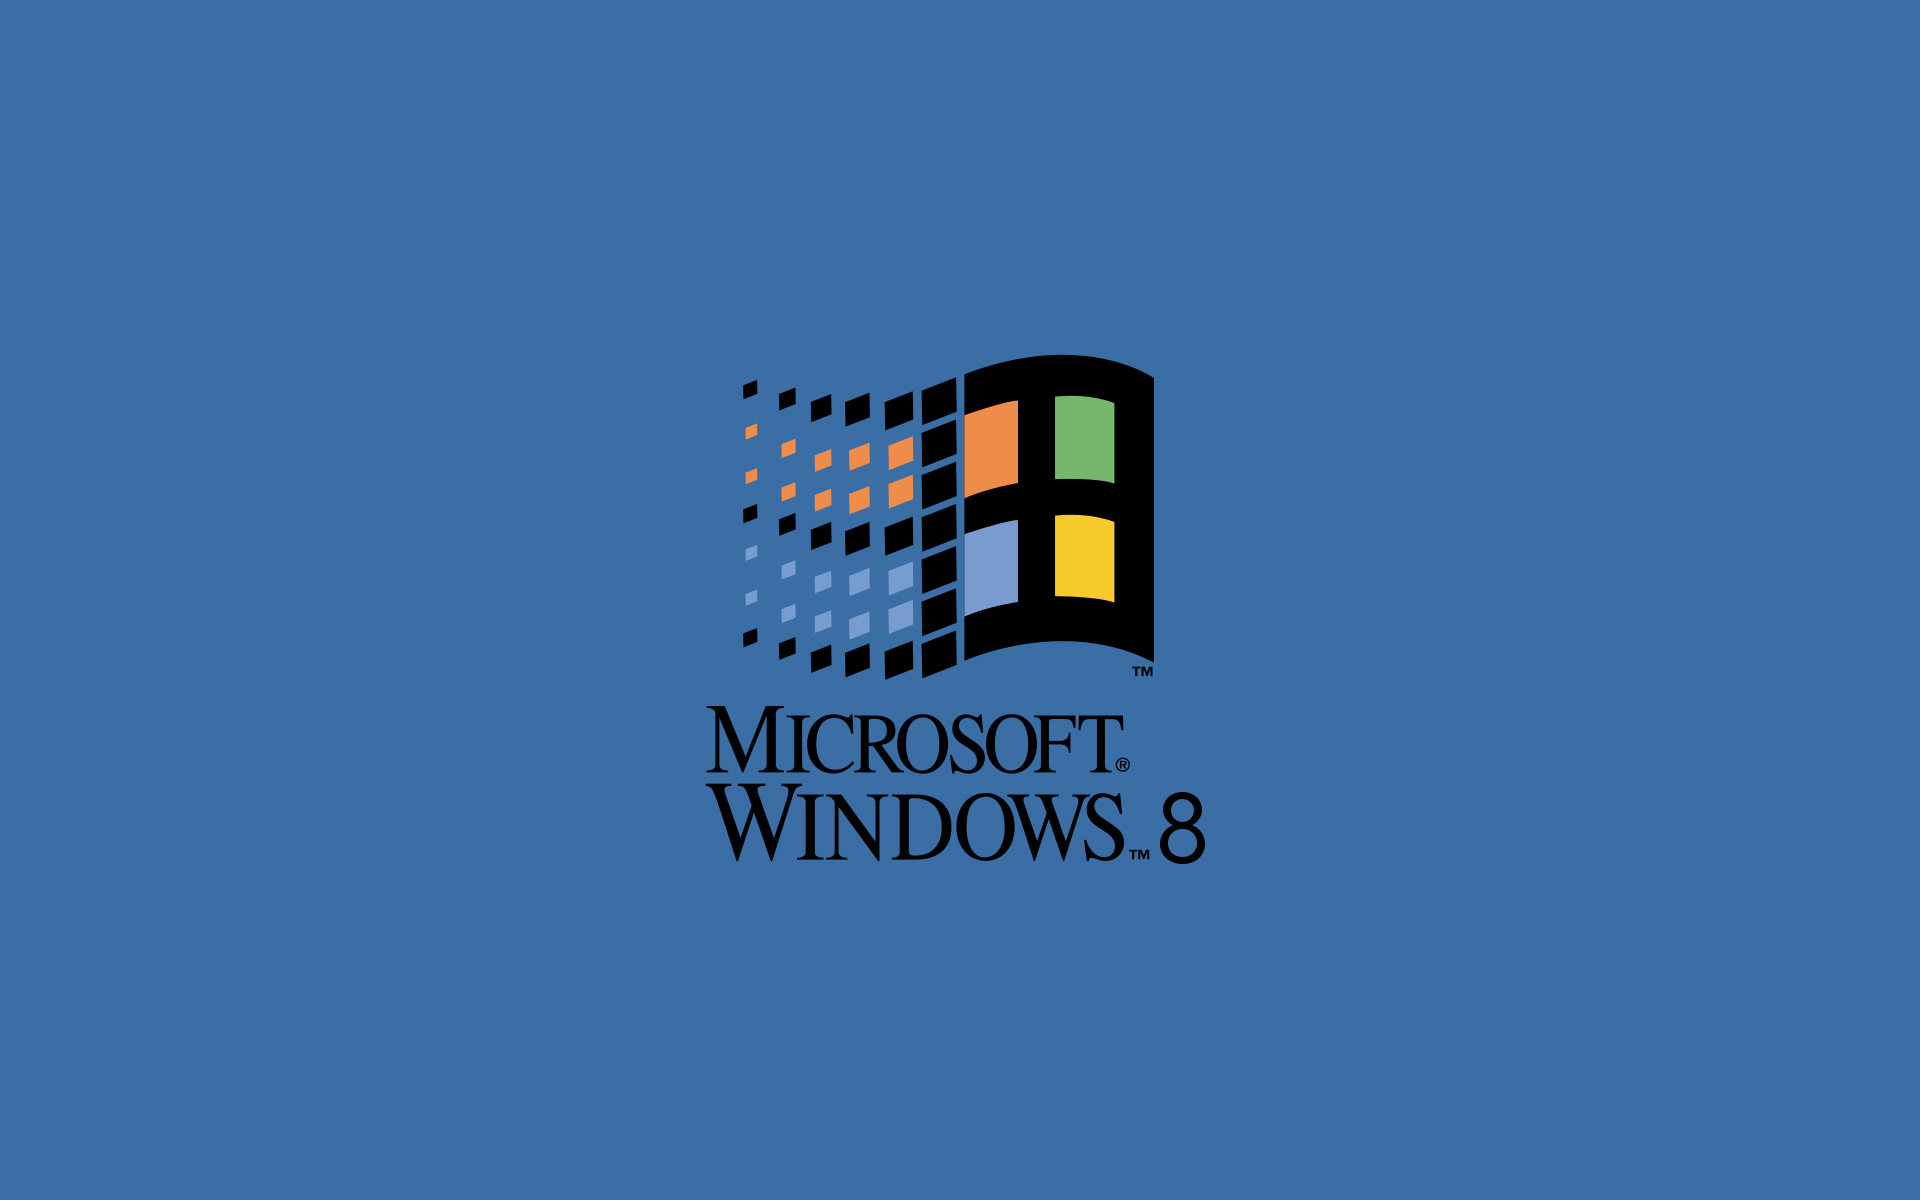 windows 95 desktop background 1. Background Check All